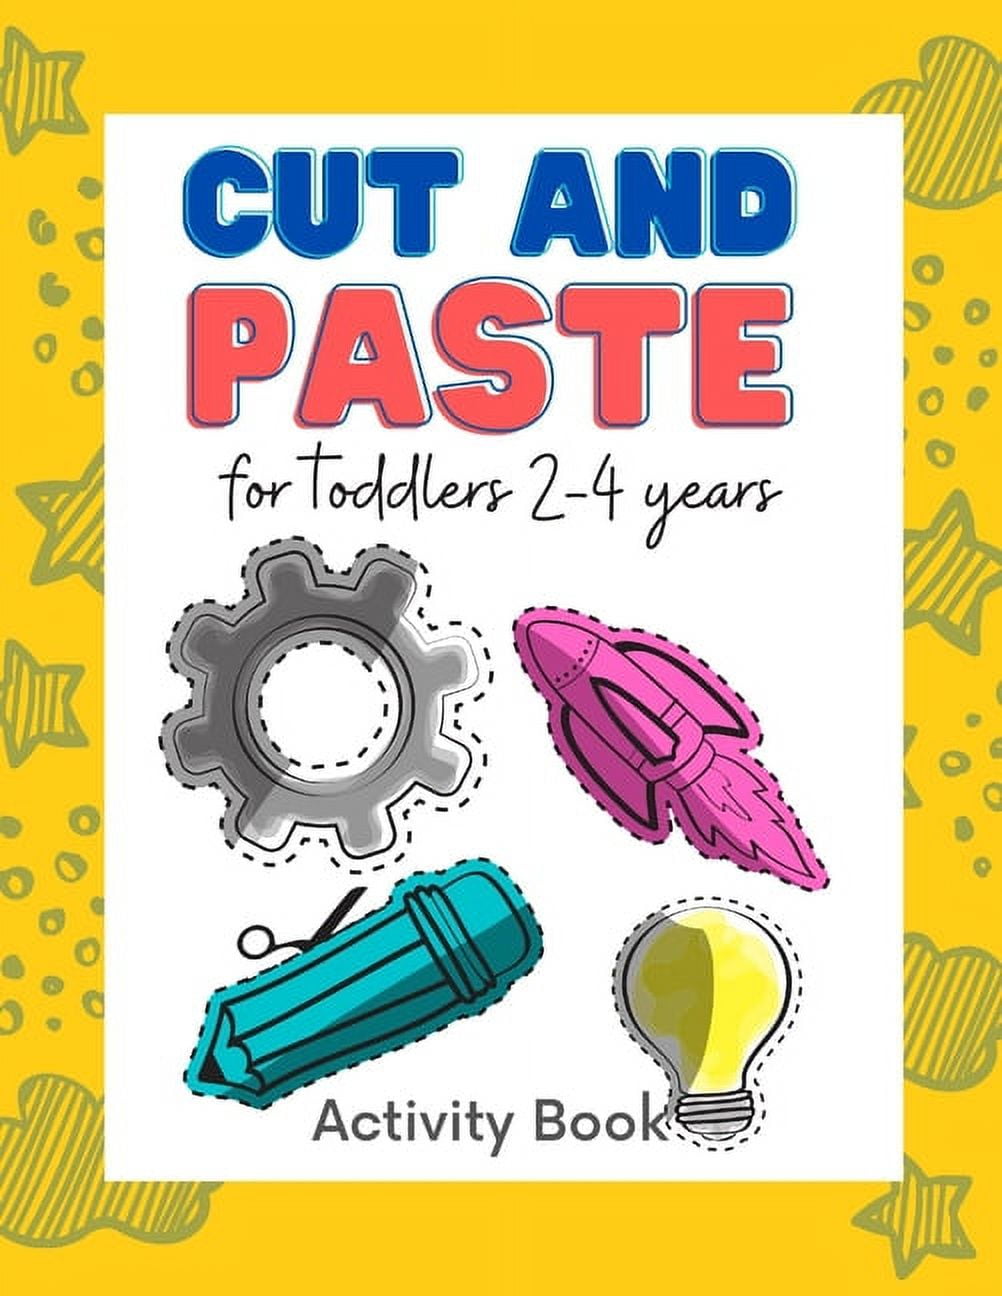 scissor skills for toddlers 2-4 years, scissor skills activity